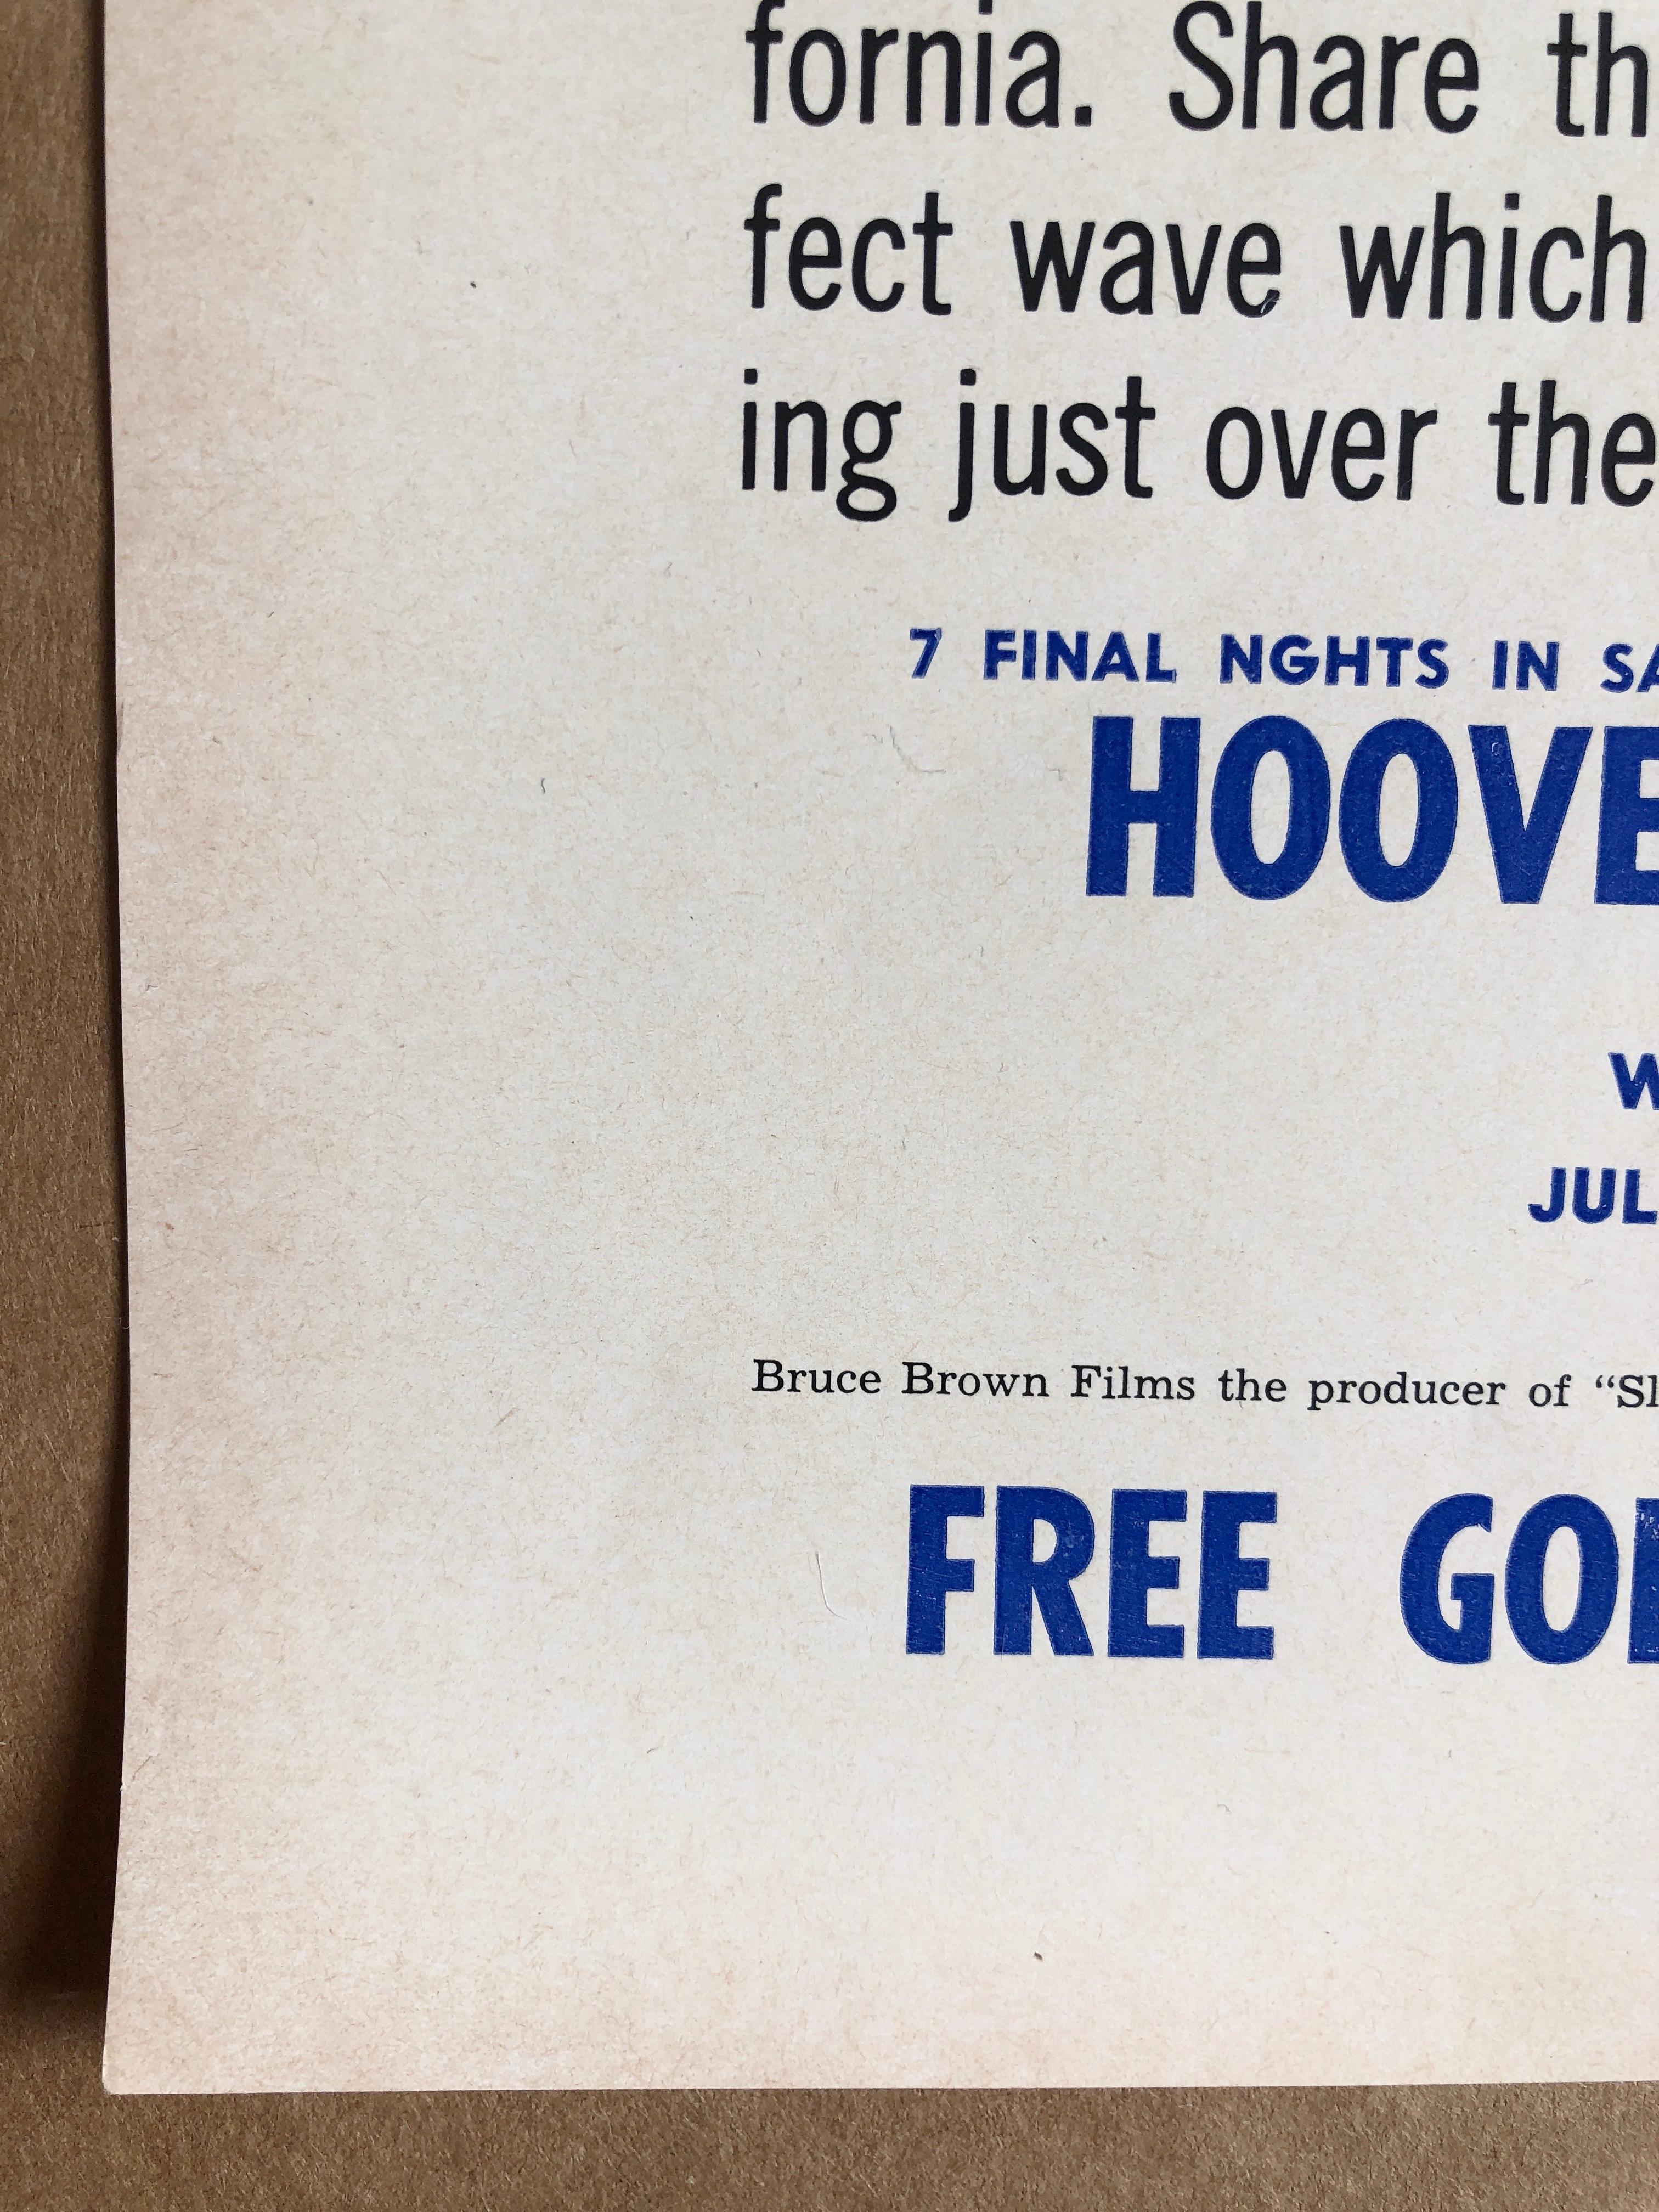 American 'The Endless Summer' Original US Movie Poster by John Van Hamersveld, 1965